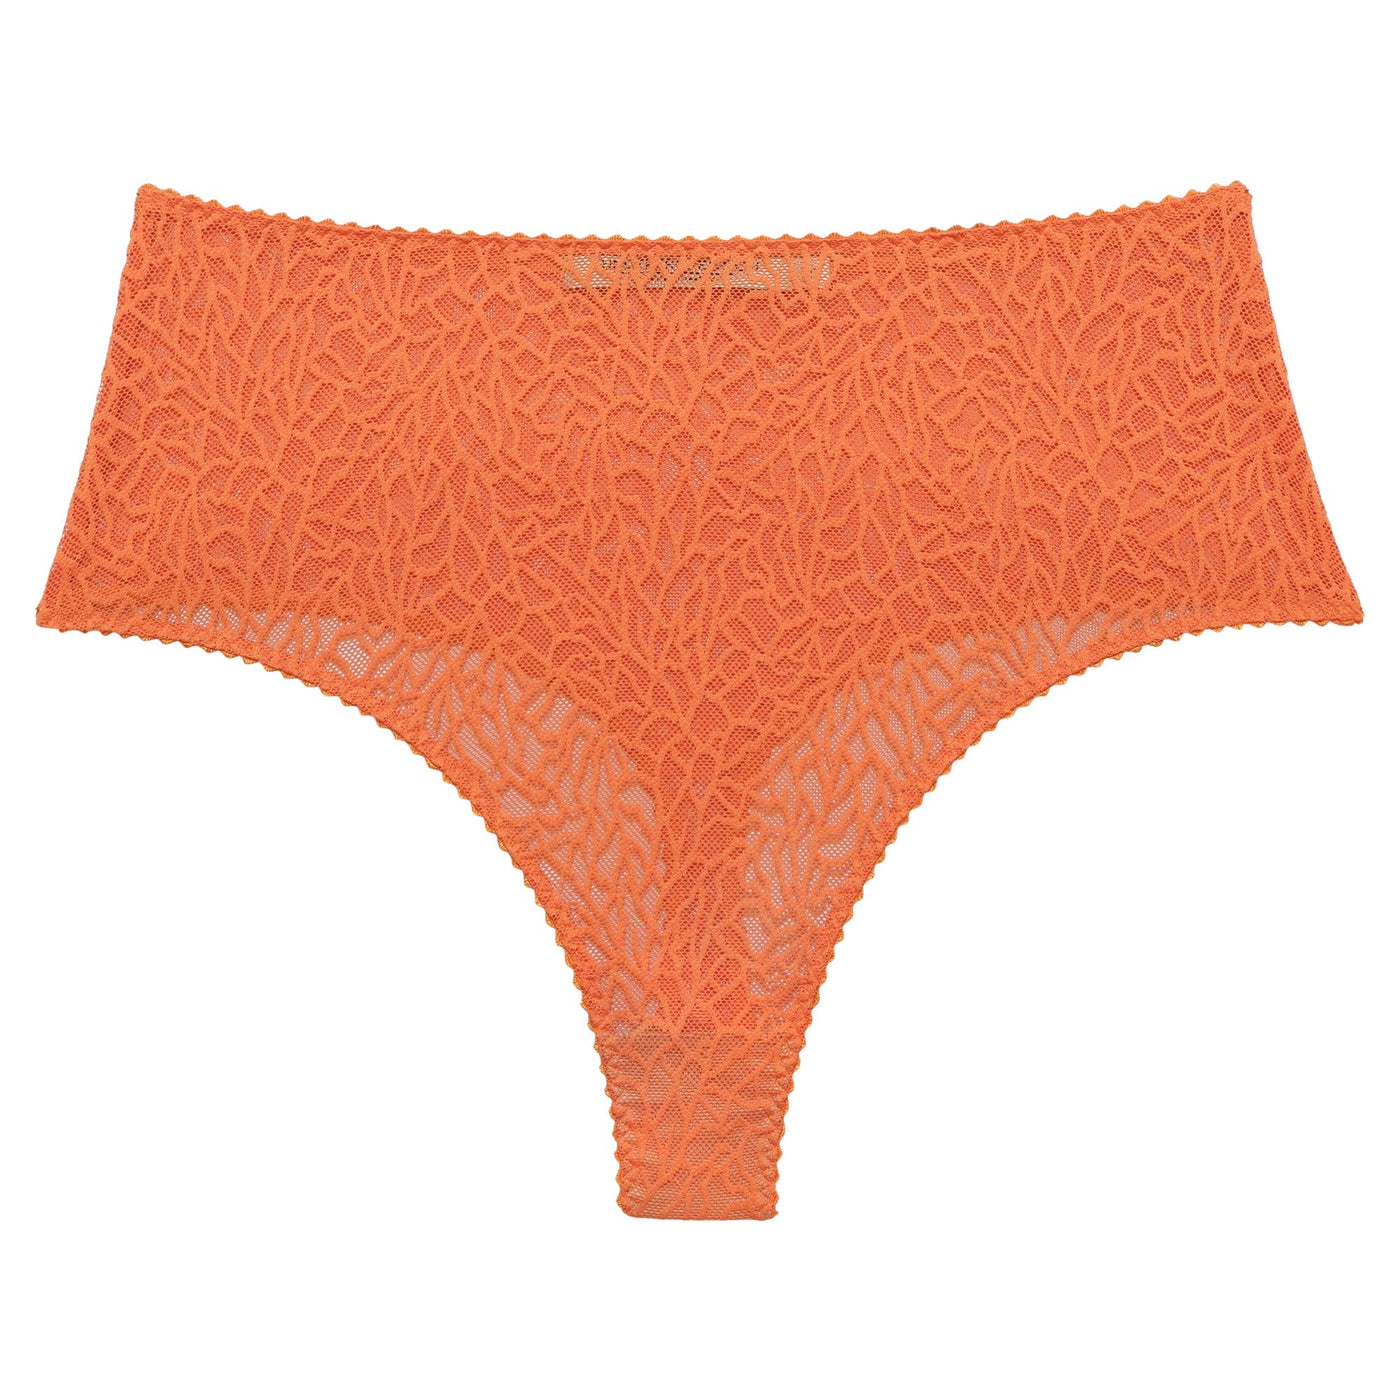 Underprotection Tora High String Orange.